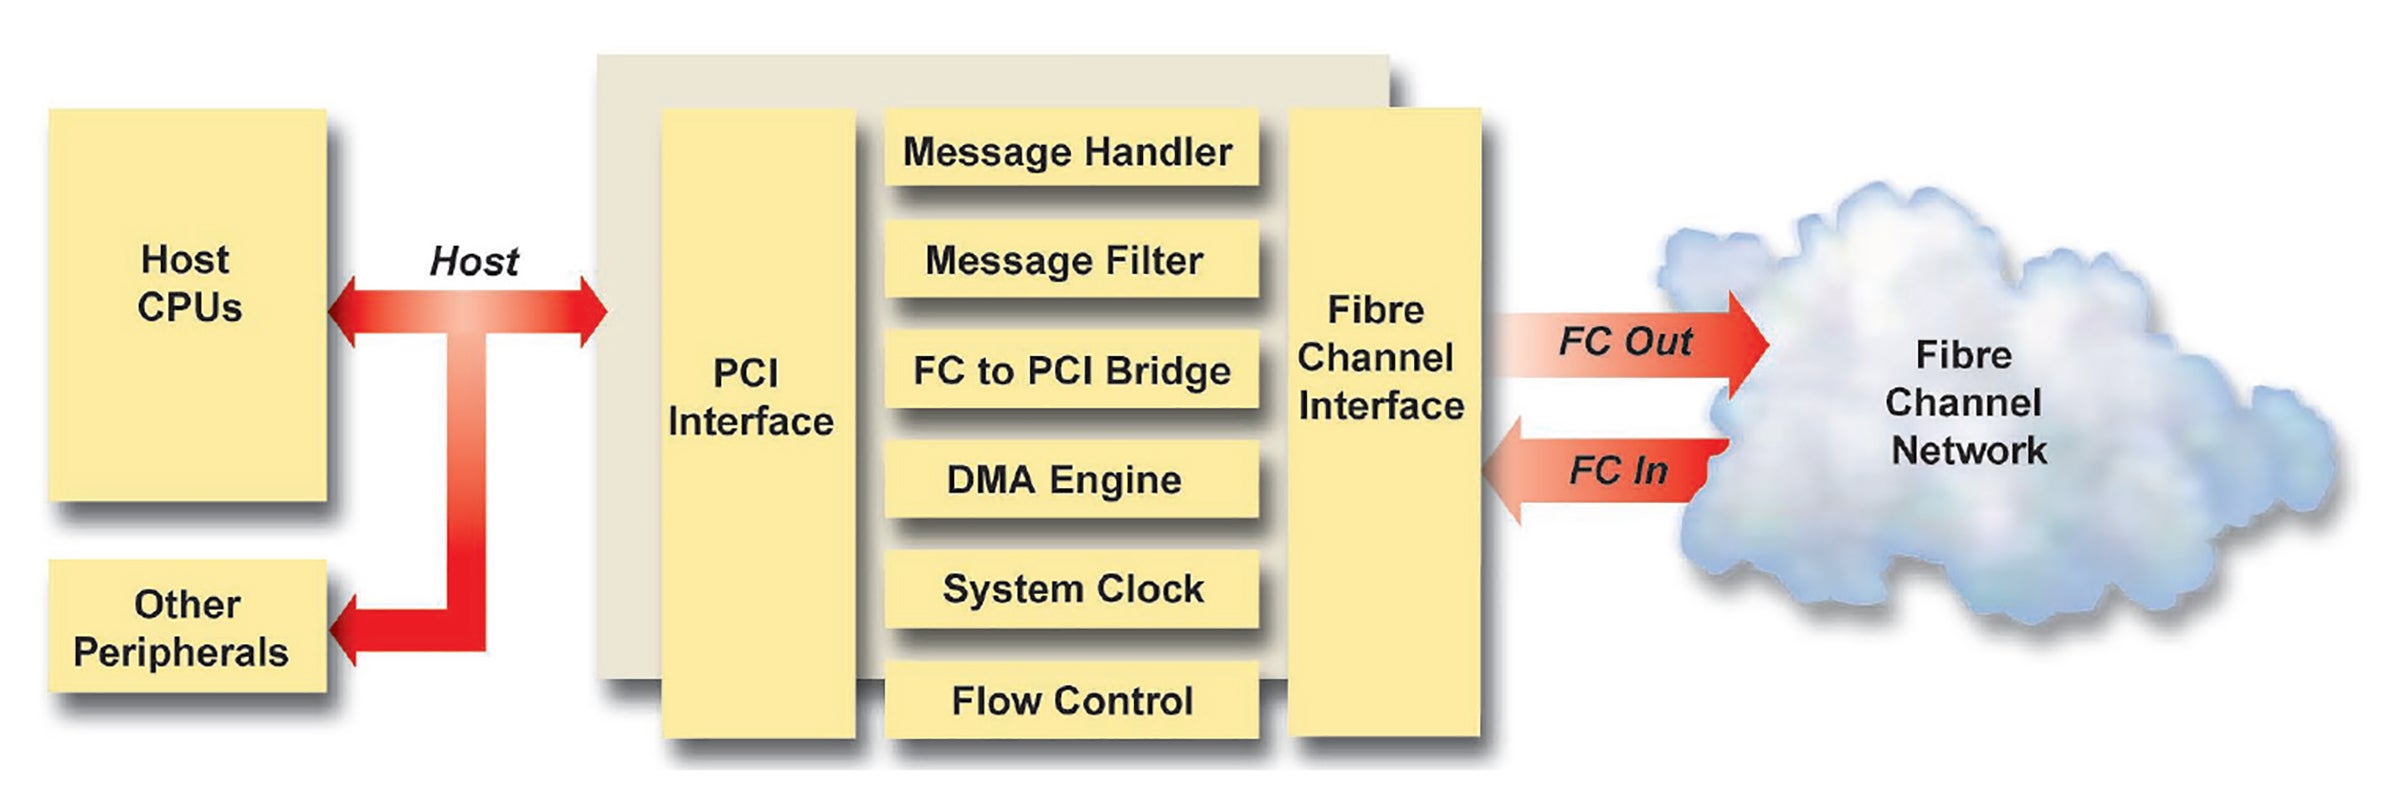 Network interface diagram